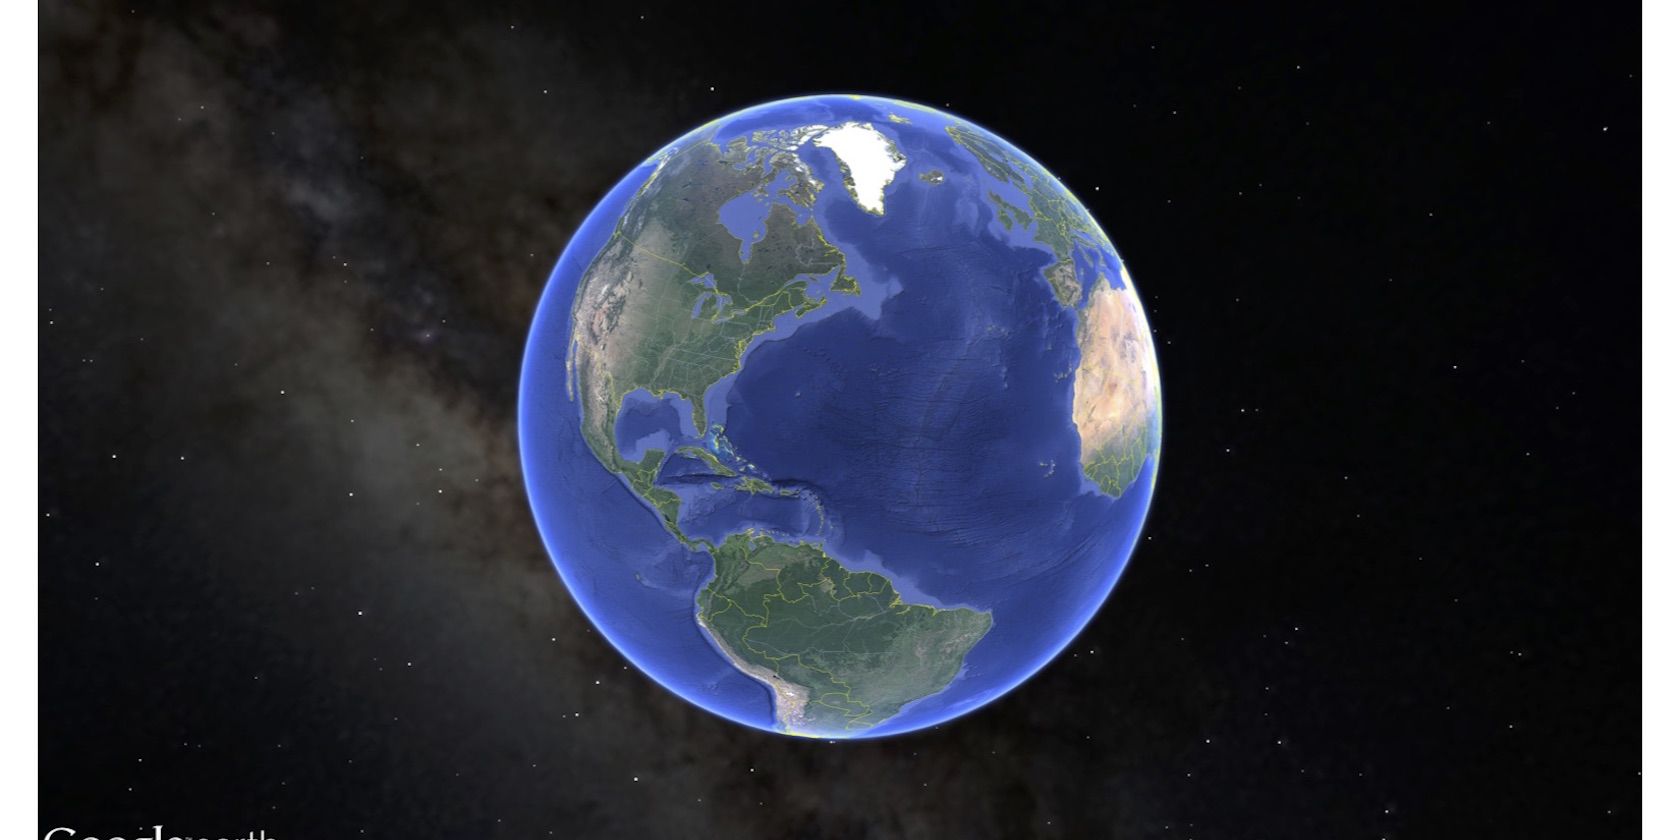 Free google earth download 2015 gaseinside